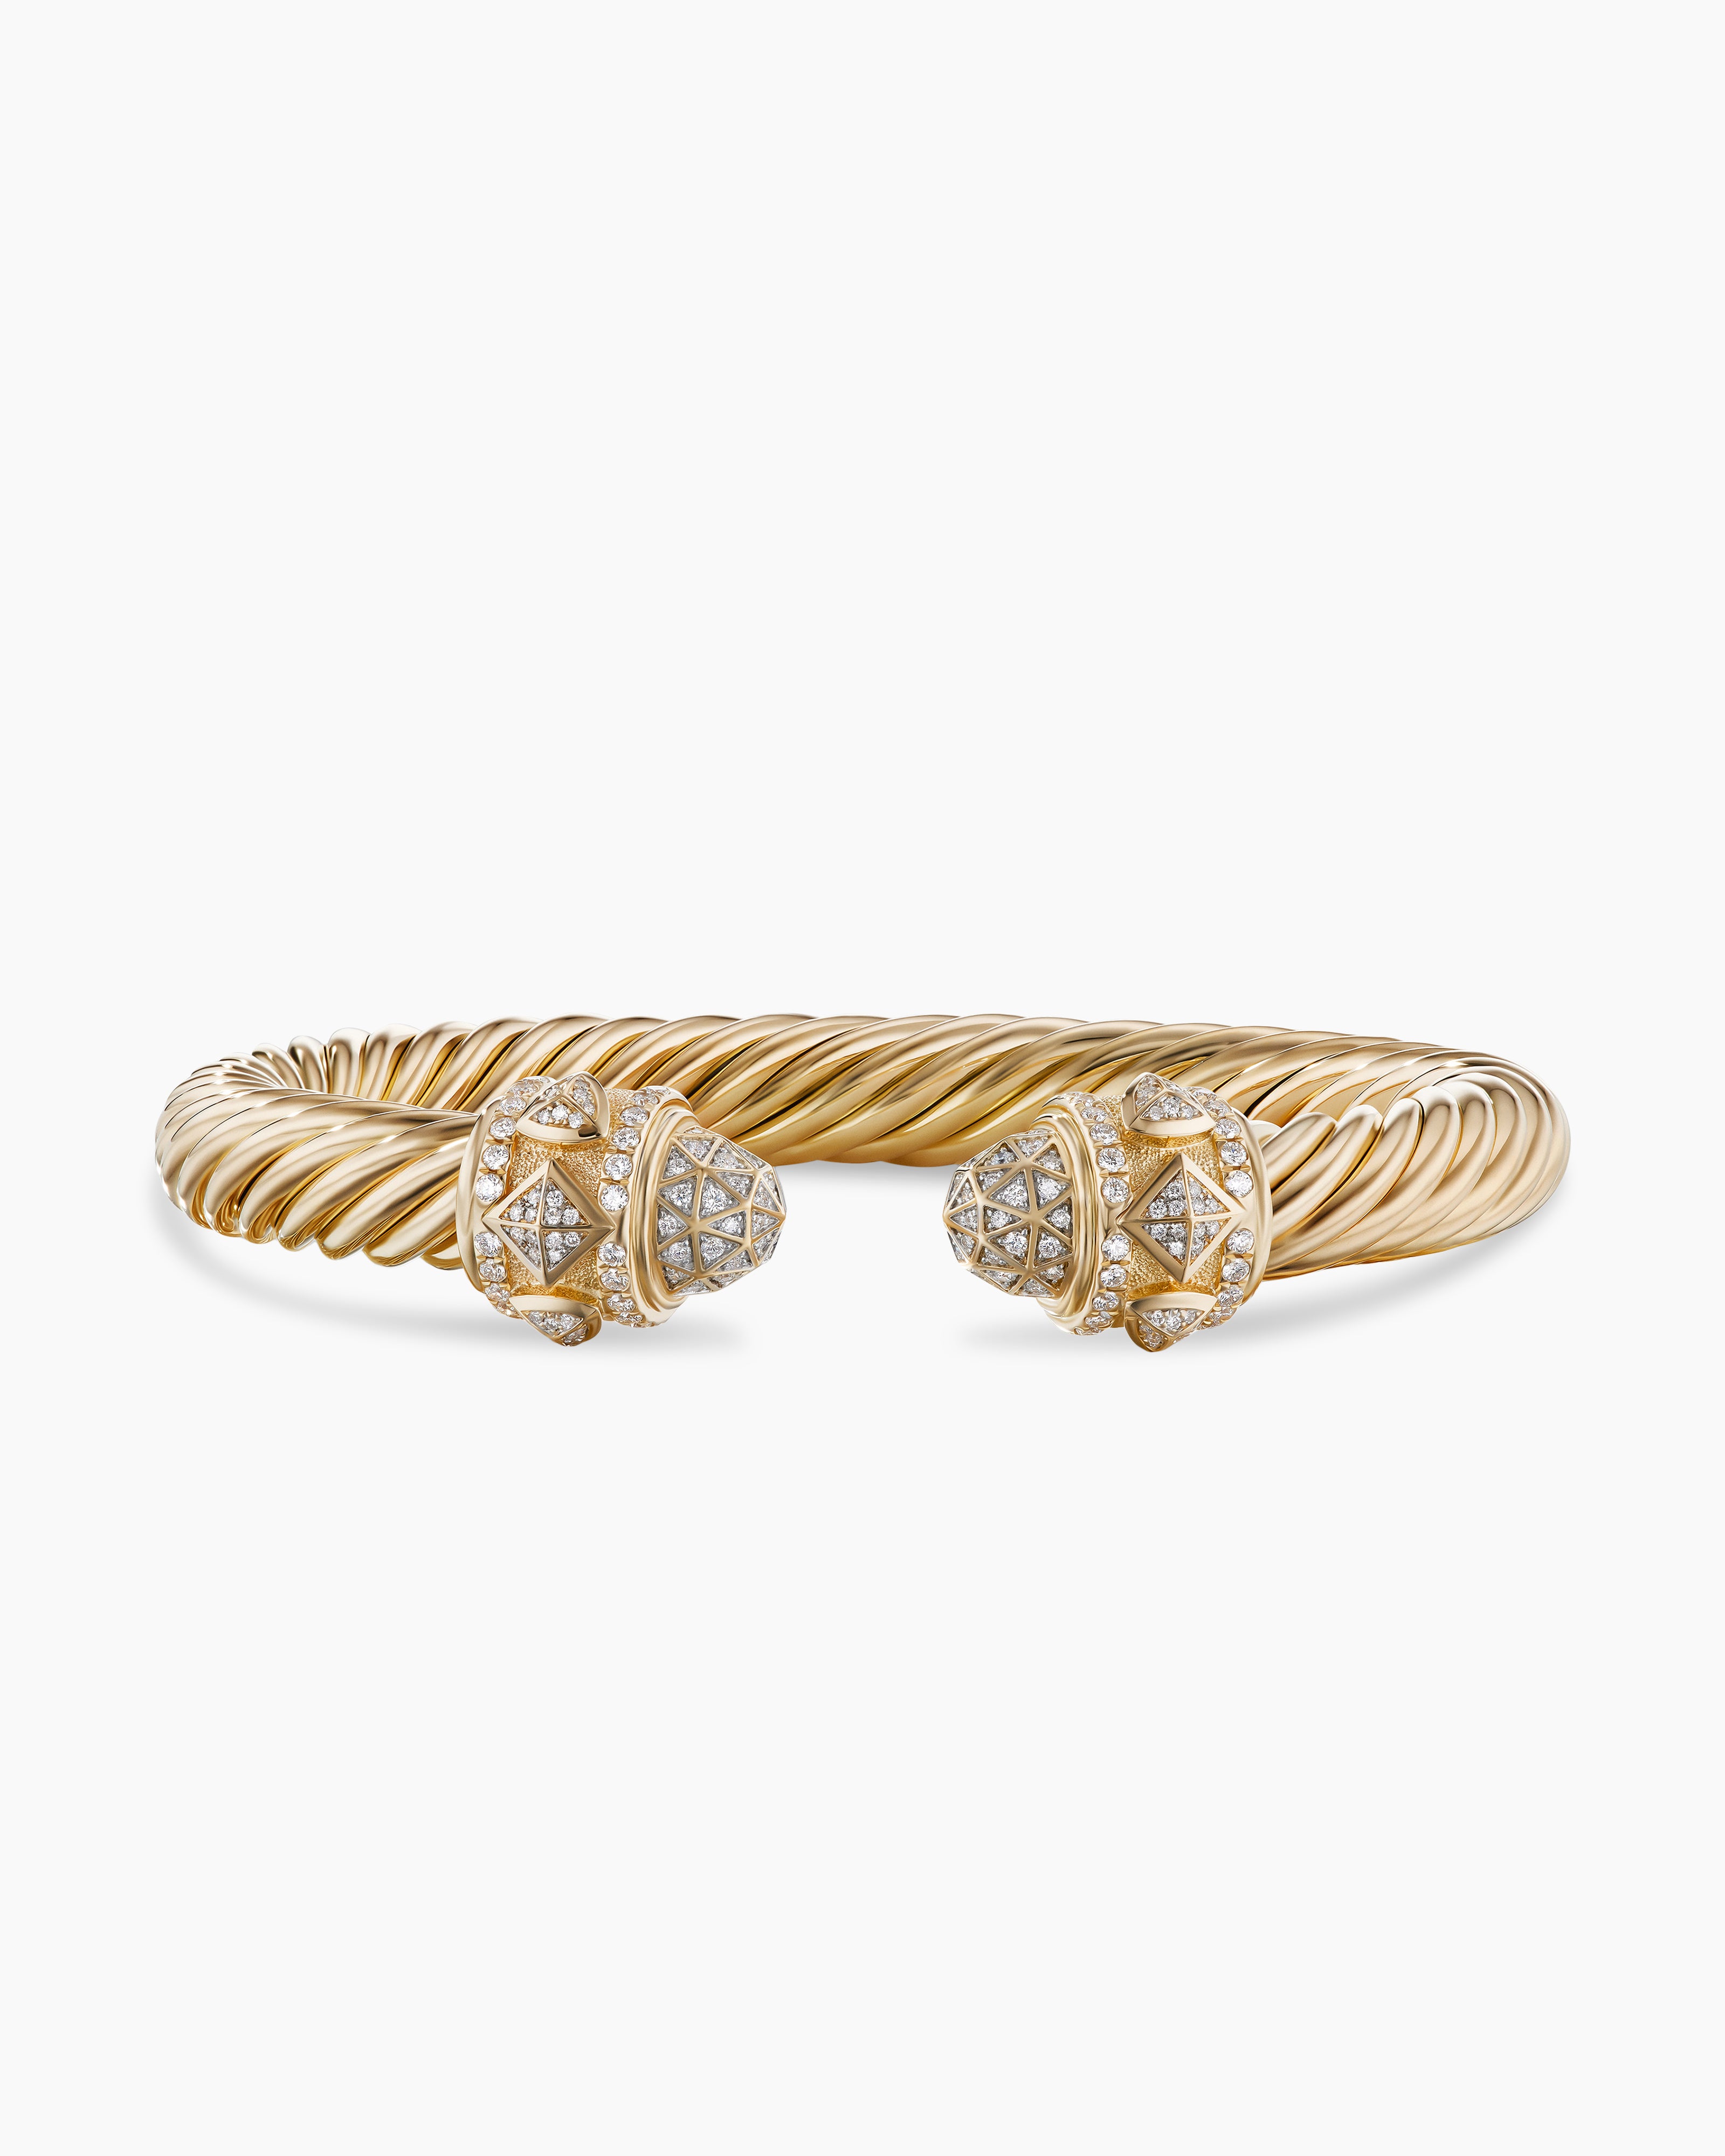 David Yurman 18K Yellow Gold Modern Renaissance Bracelet with Diamonds